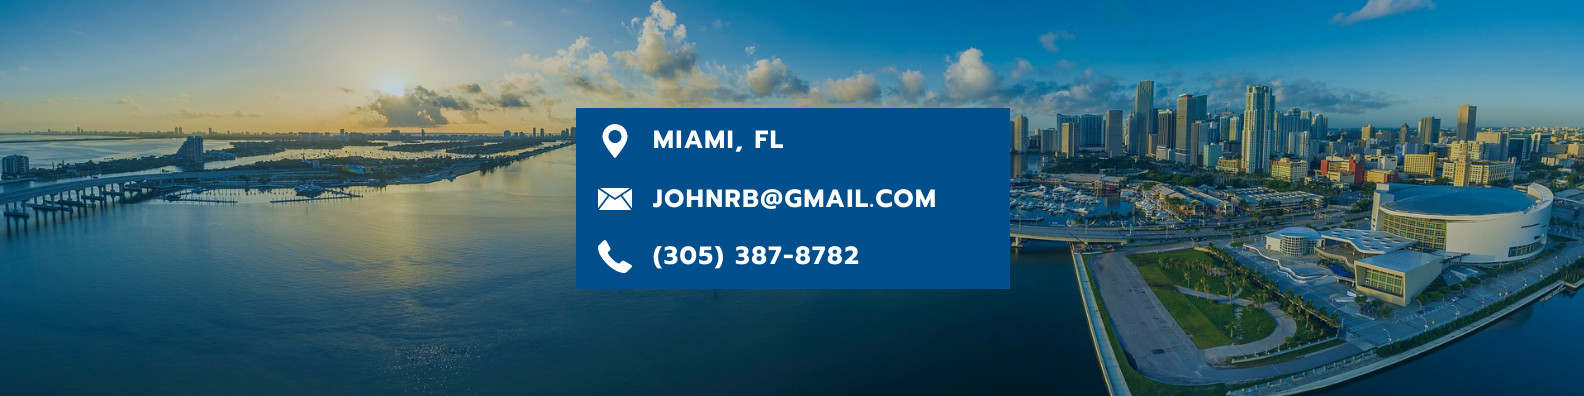 JohnRB Miami Linkedin Profile BG